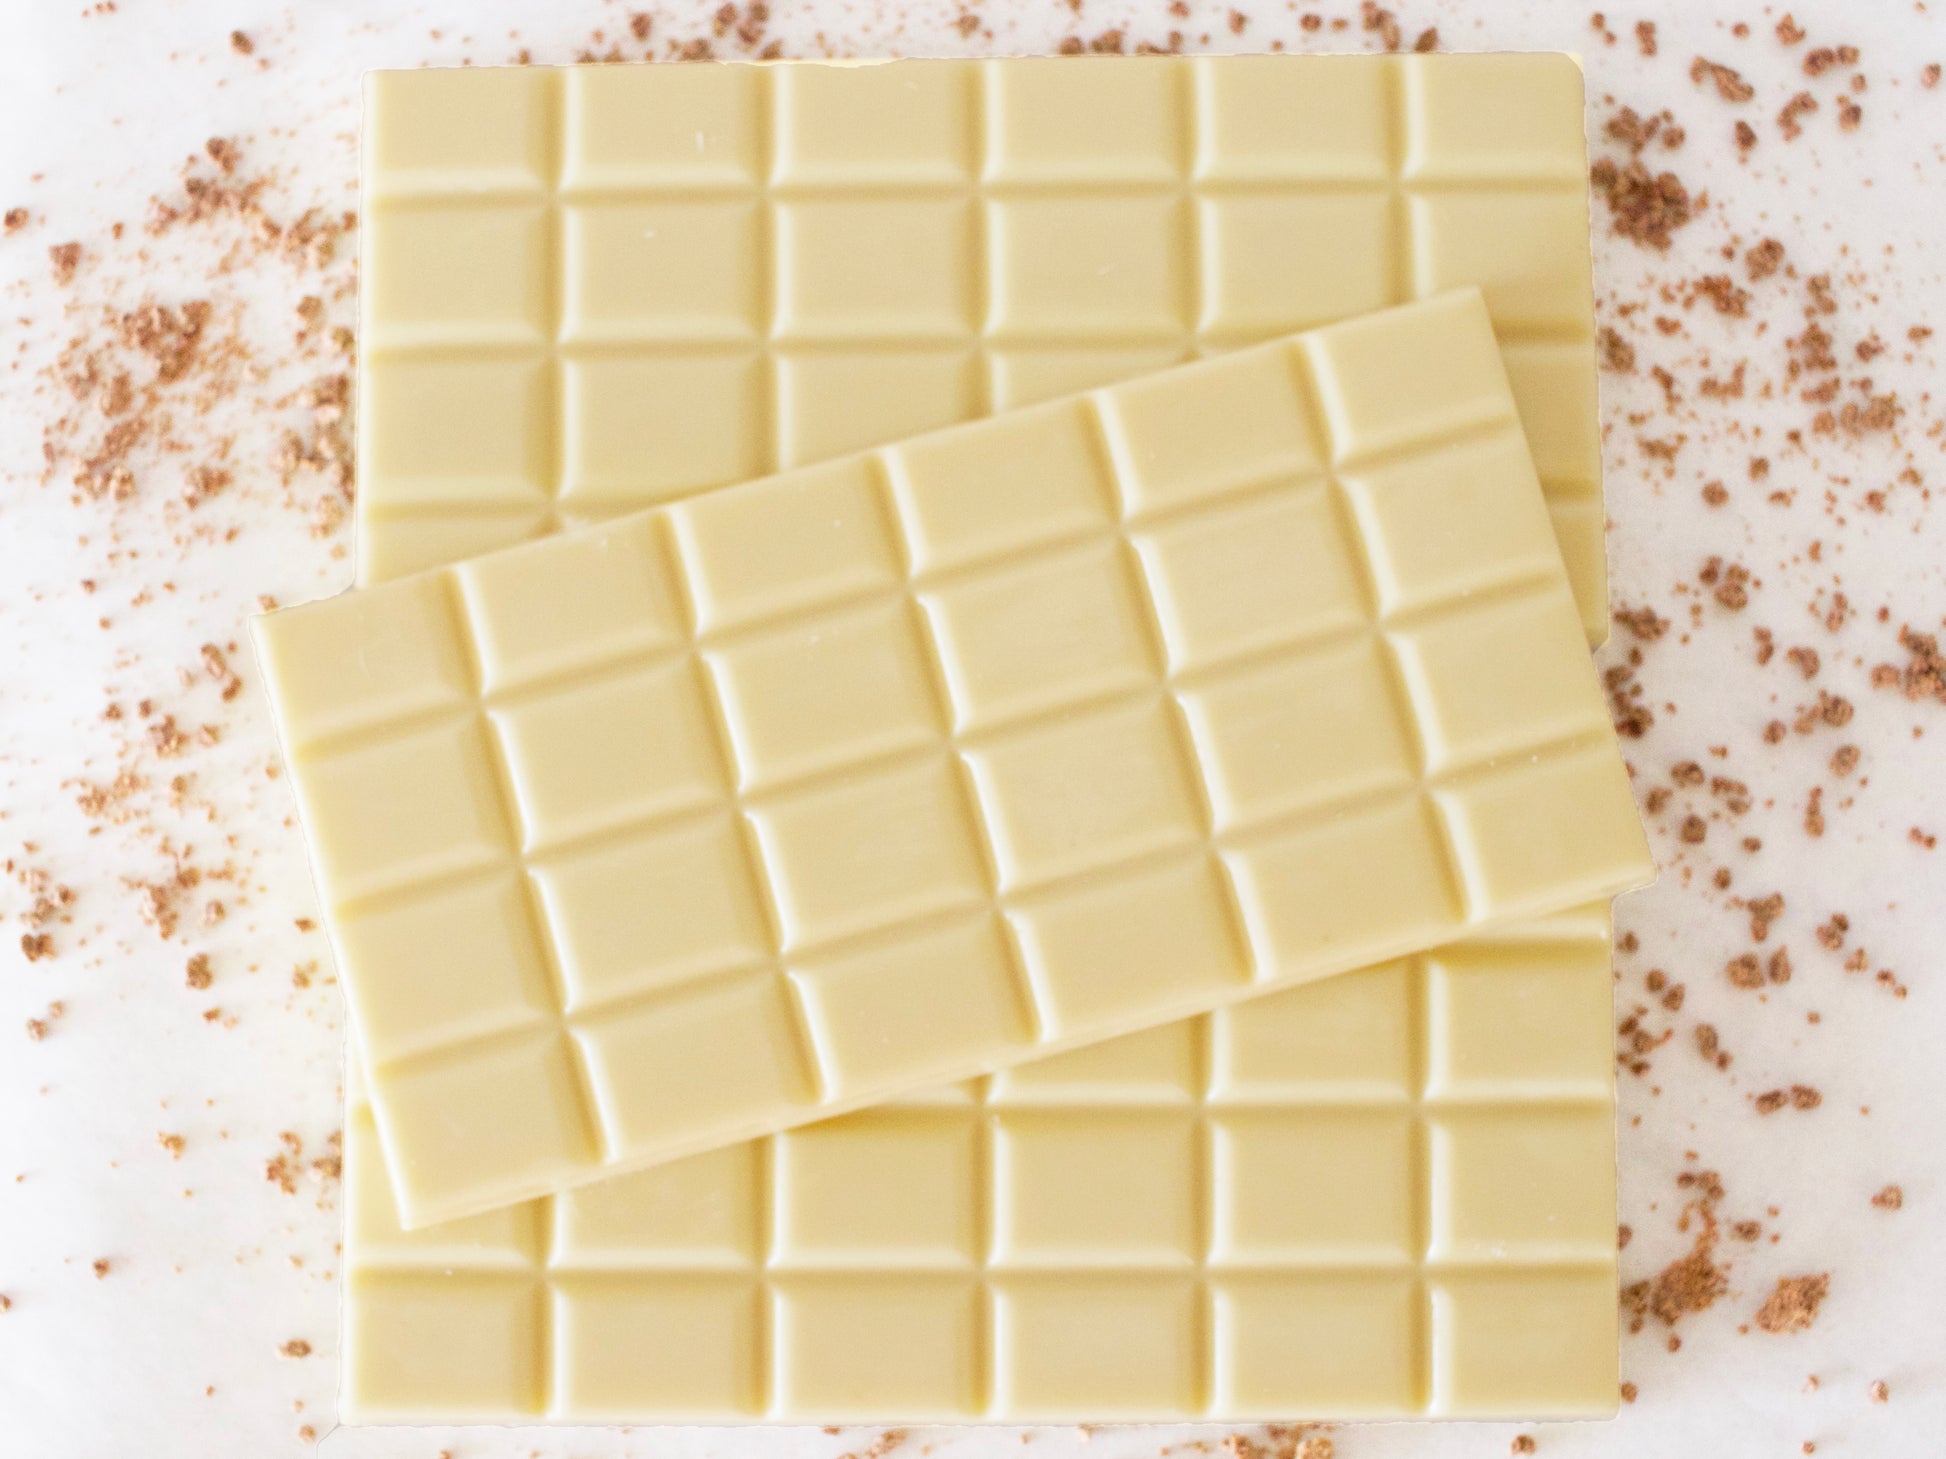 image shows 3, 100g hand made white sugar free chocolate bars